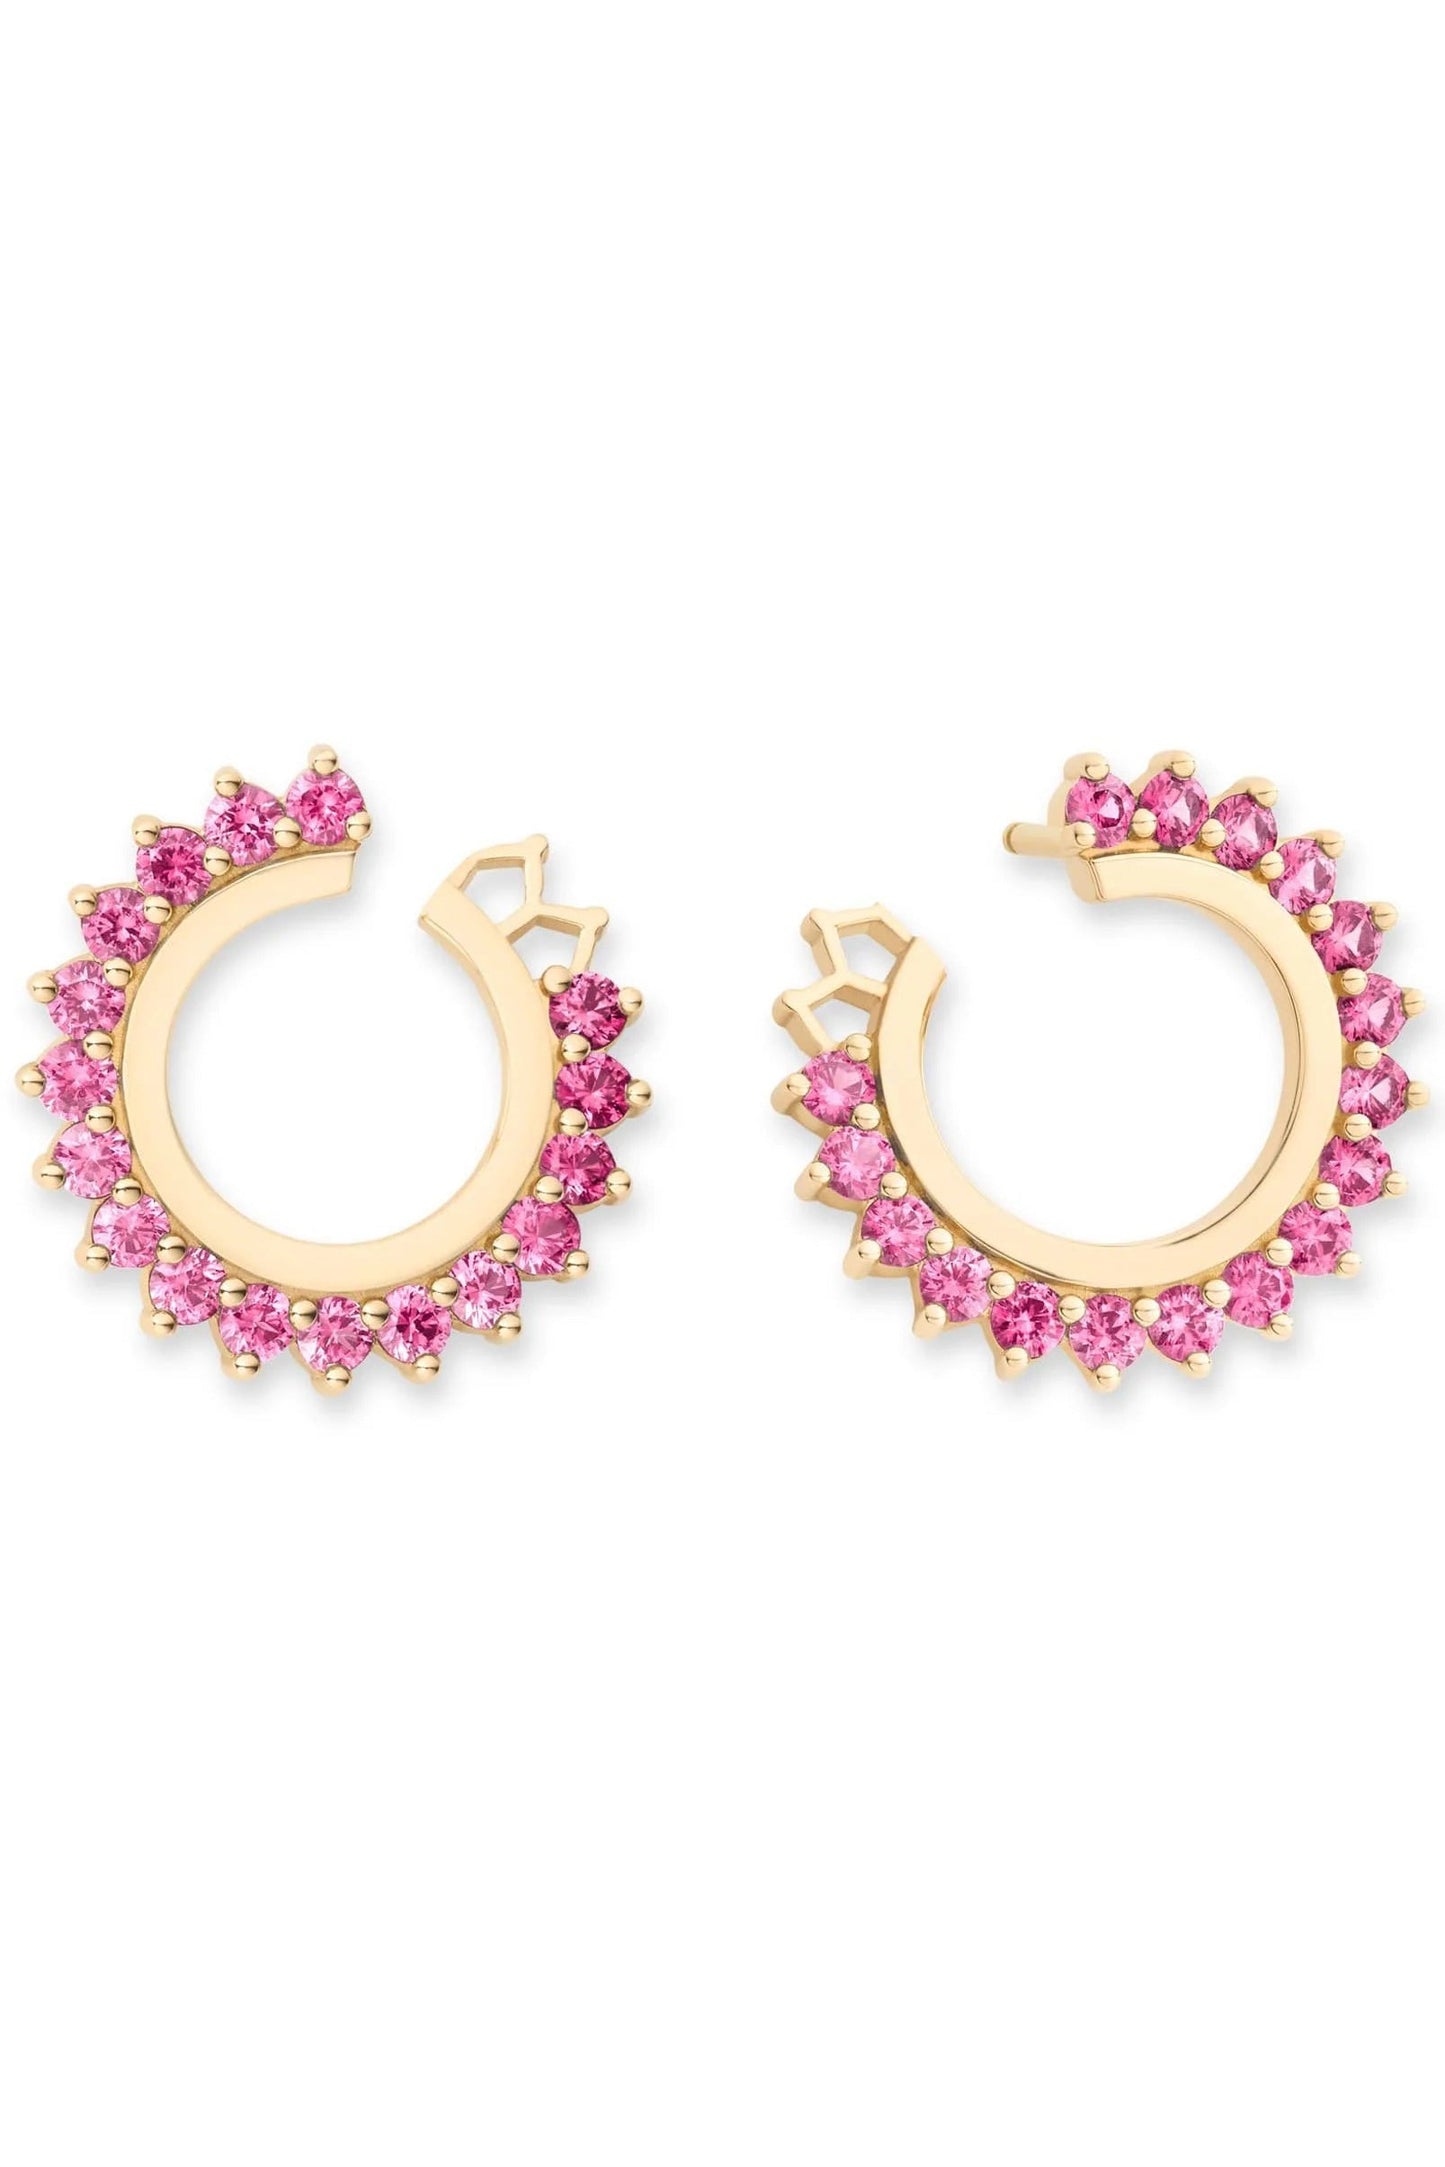 Vendome Pink Sapphire Earrings JEWELRYFINE JEWELEARRING NOUVEL HERITAGE   